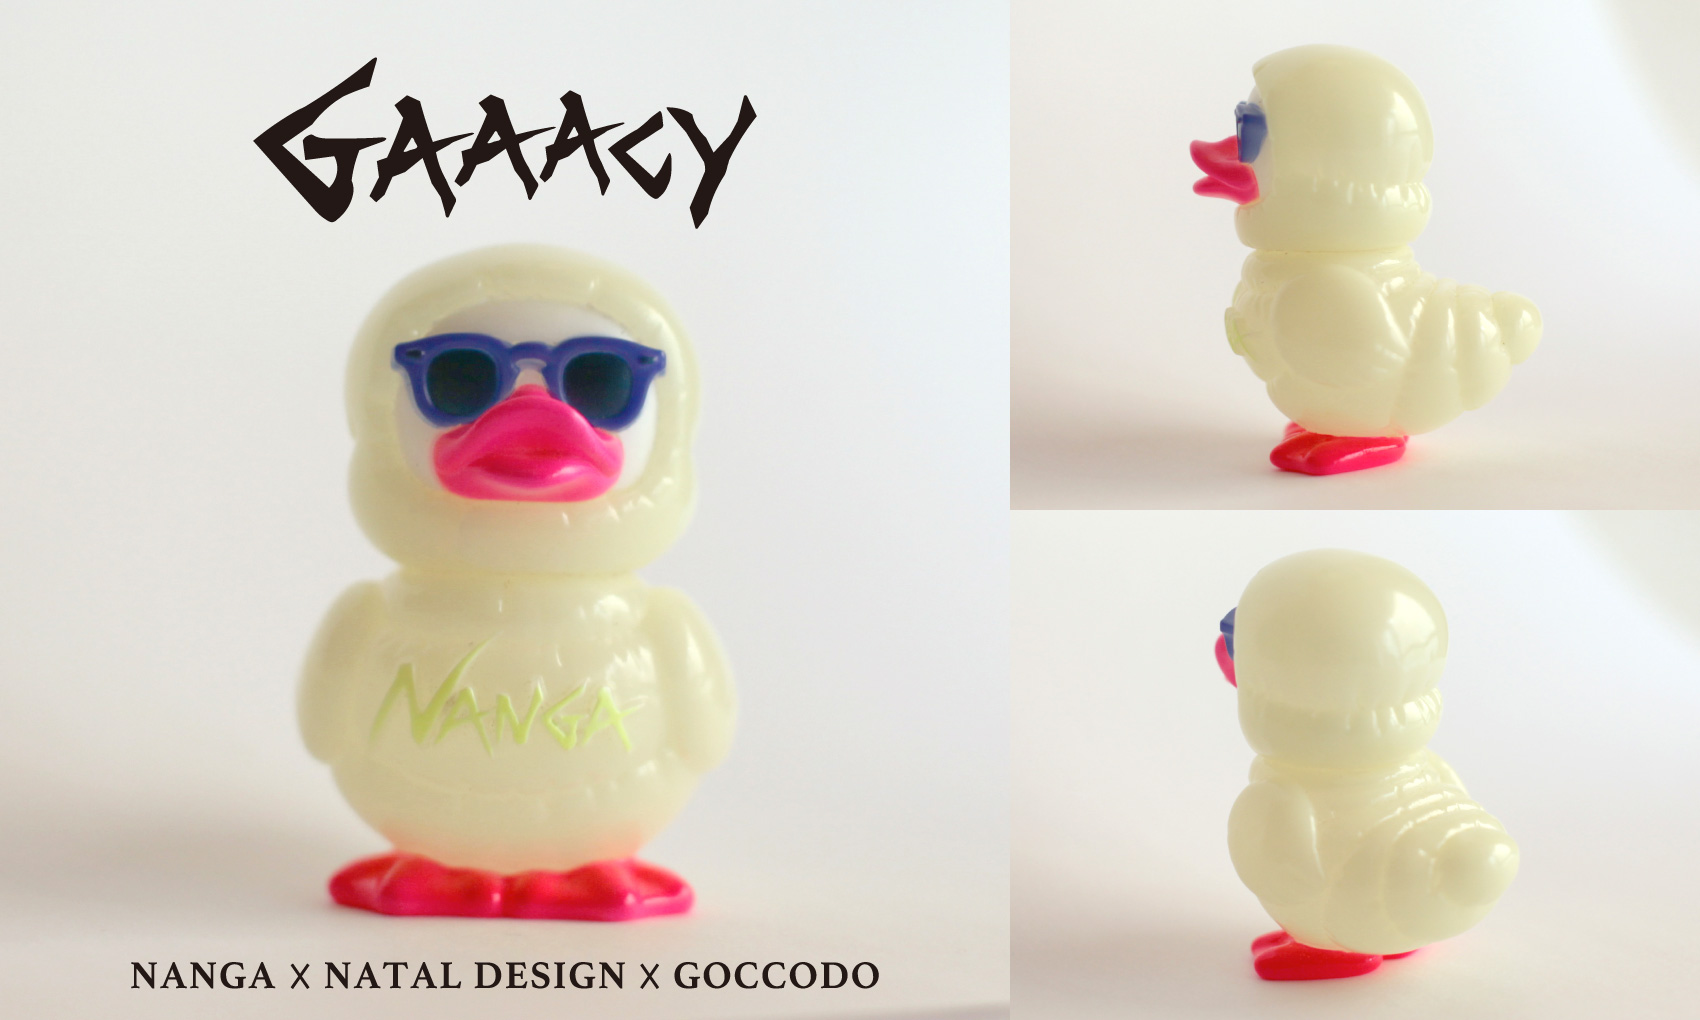 GAAACY - NANGA × NATAL DESIGN × GOCCODO